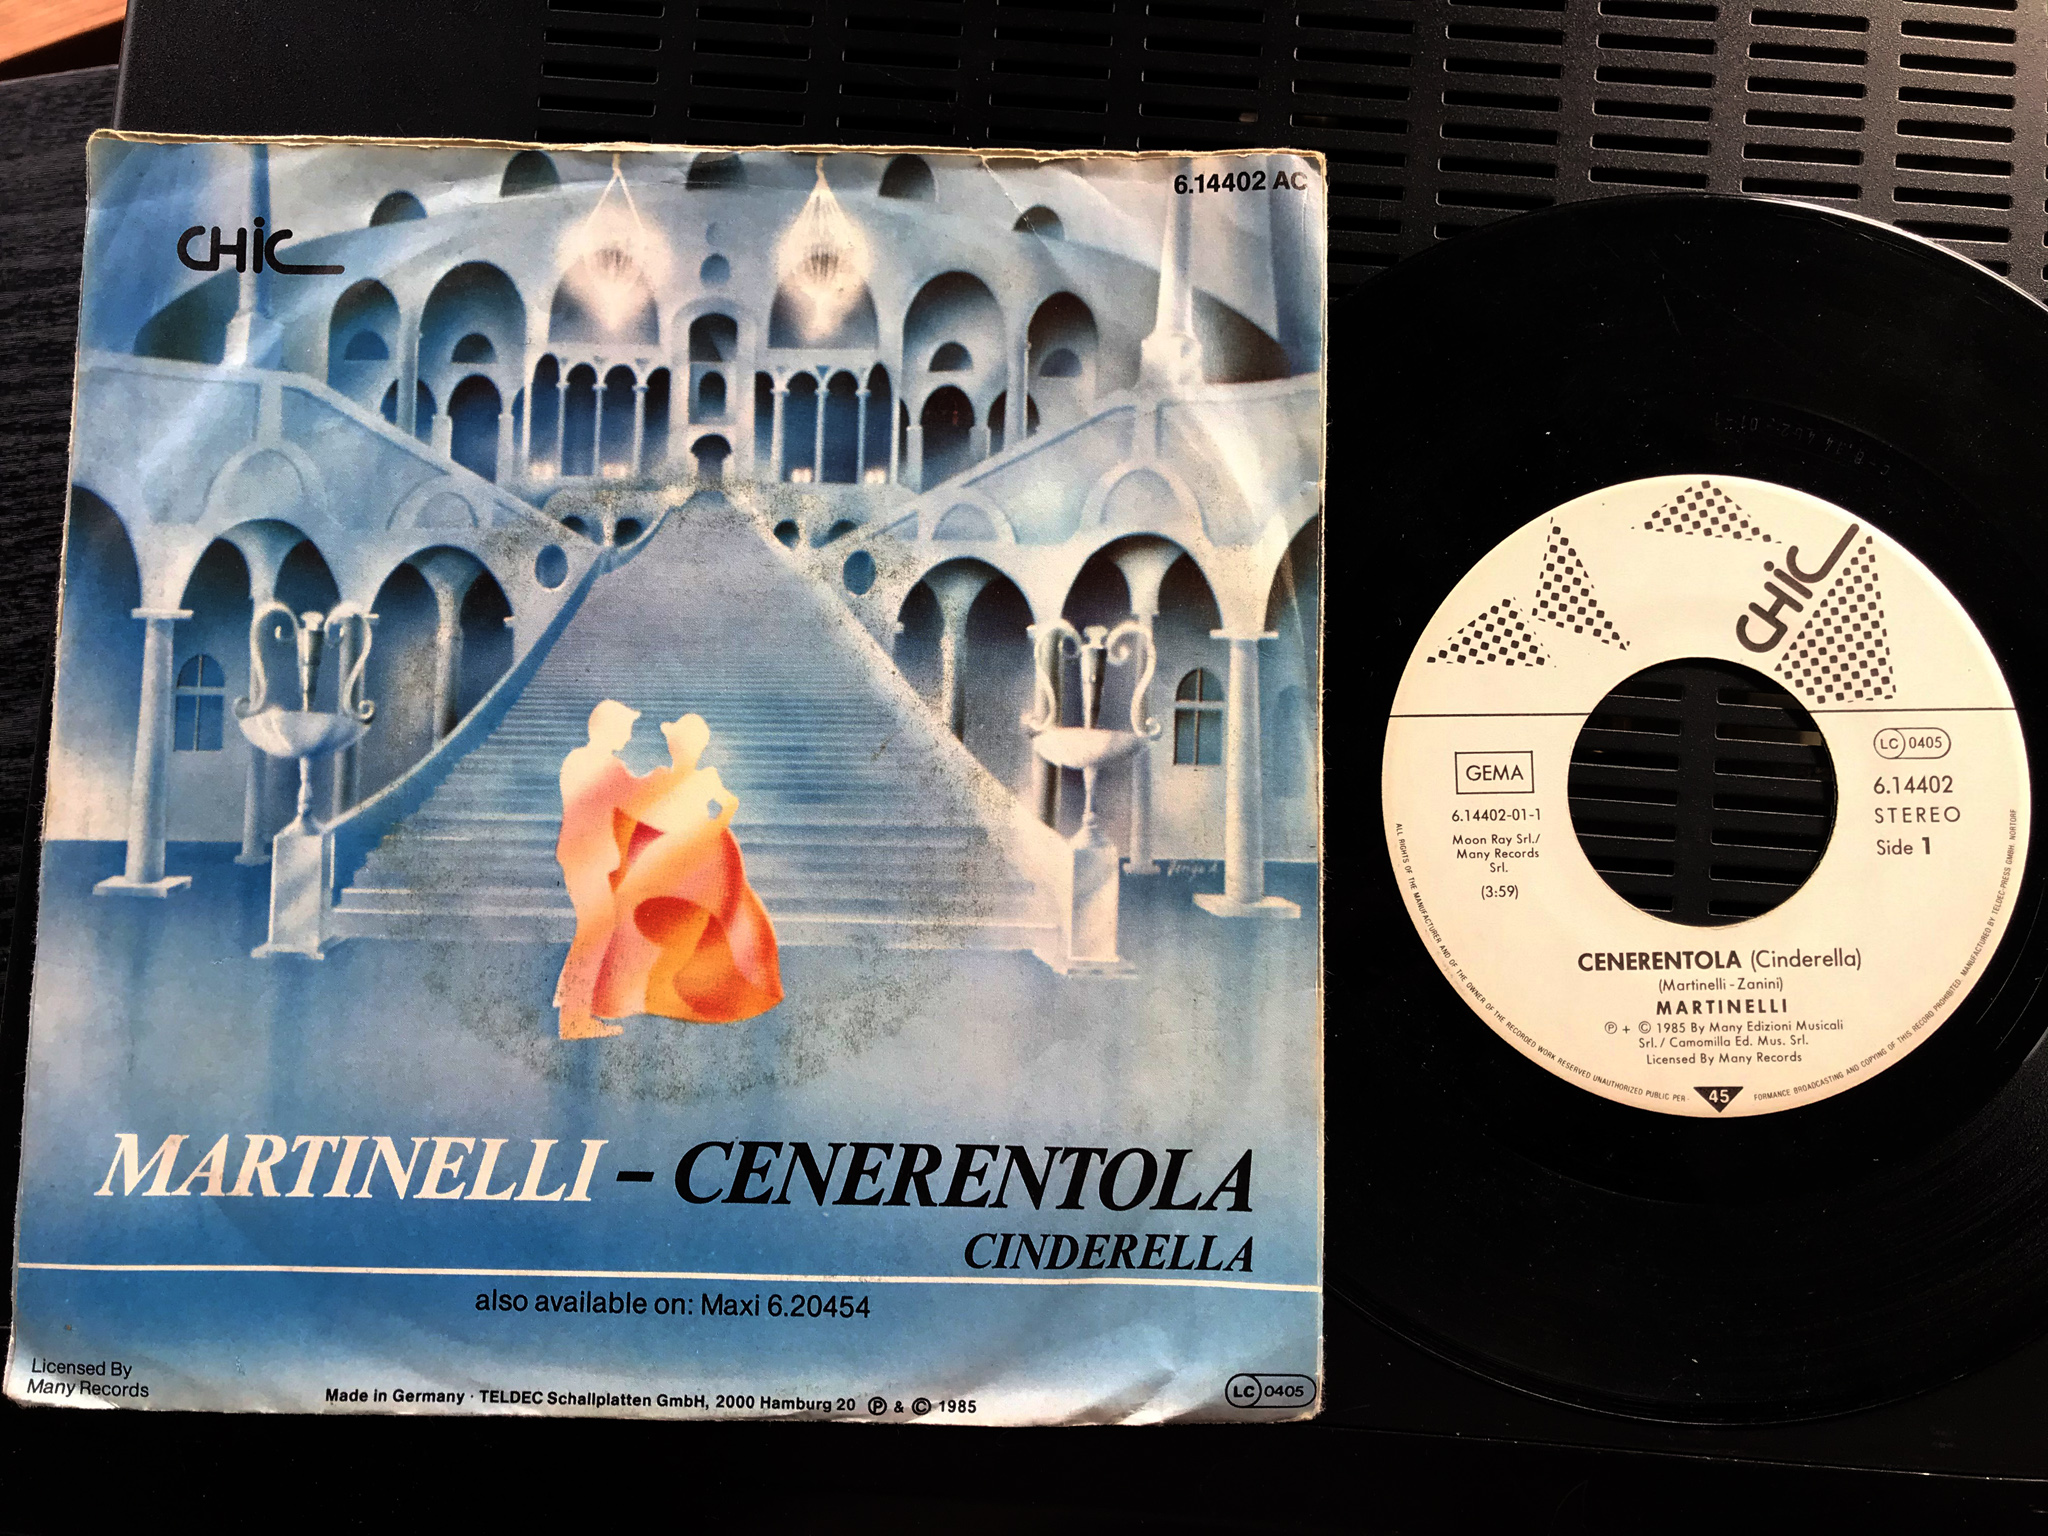 Martinelli - Cenerentola (Cinderella) 7